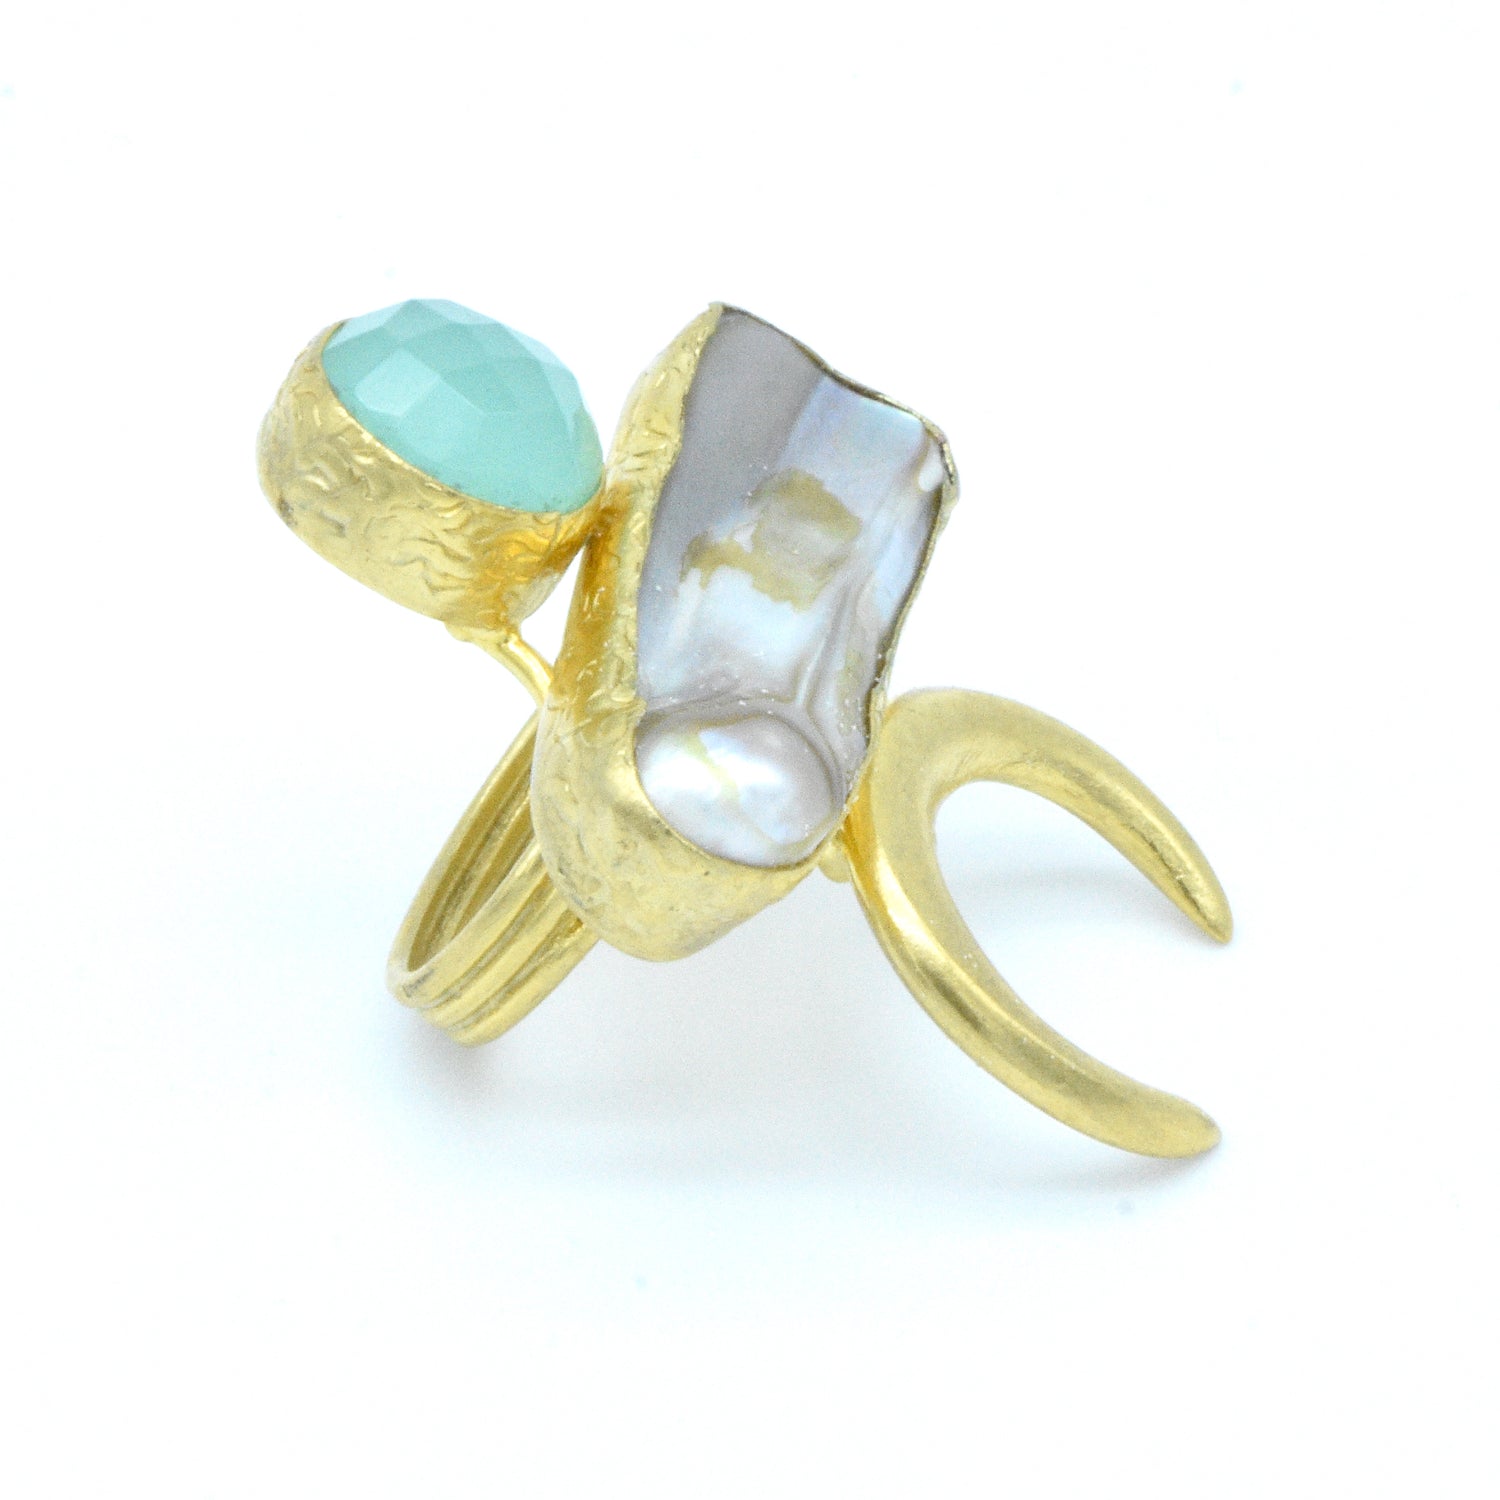 Aylas Baroque pearl, Aqua Chalcedony Ring - 21ct Gold plated semi precious gemstone - Handmade in Ottoman Style by Artisan